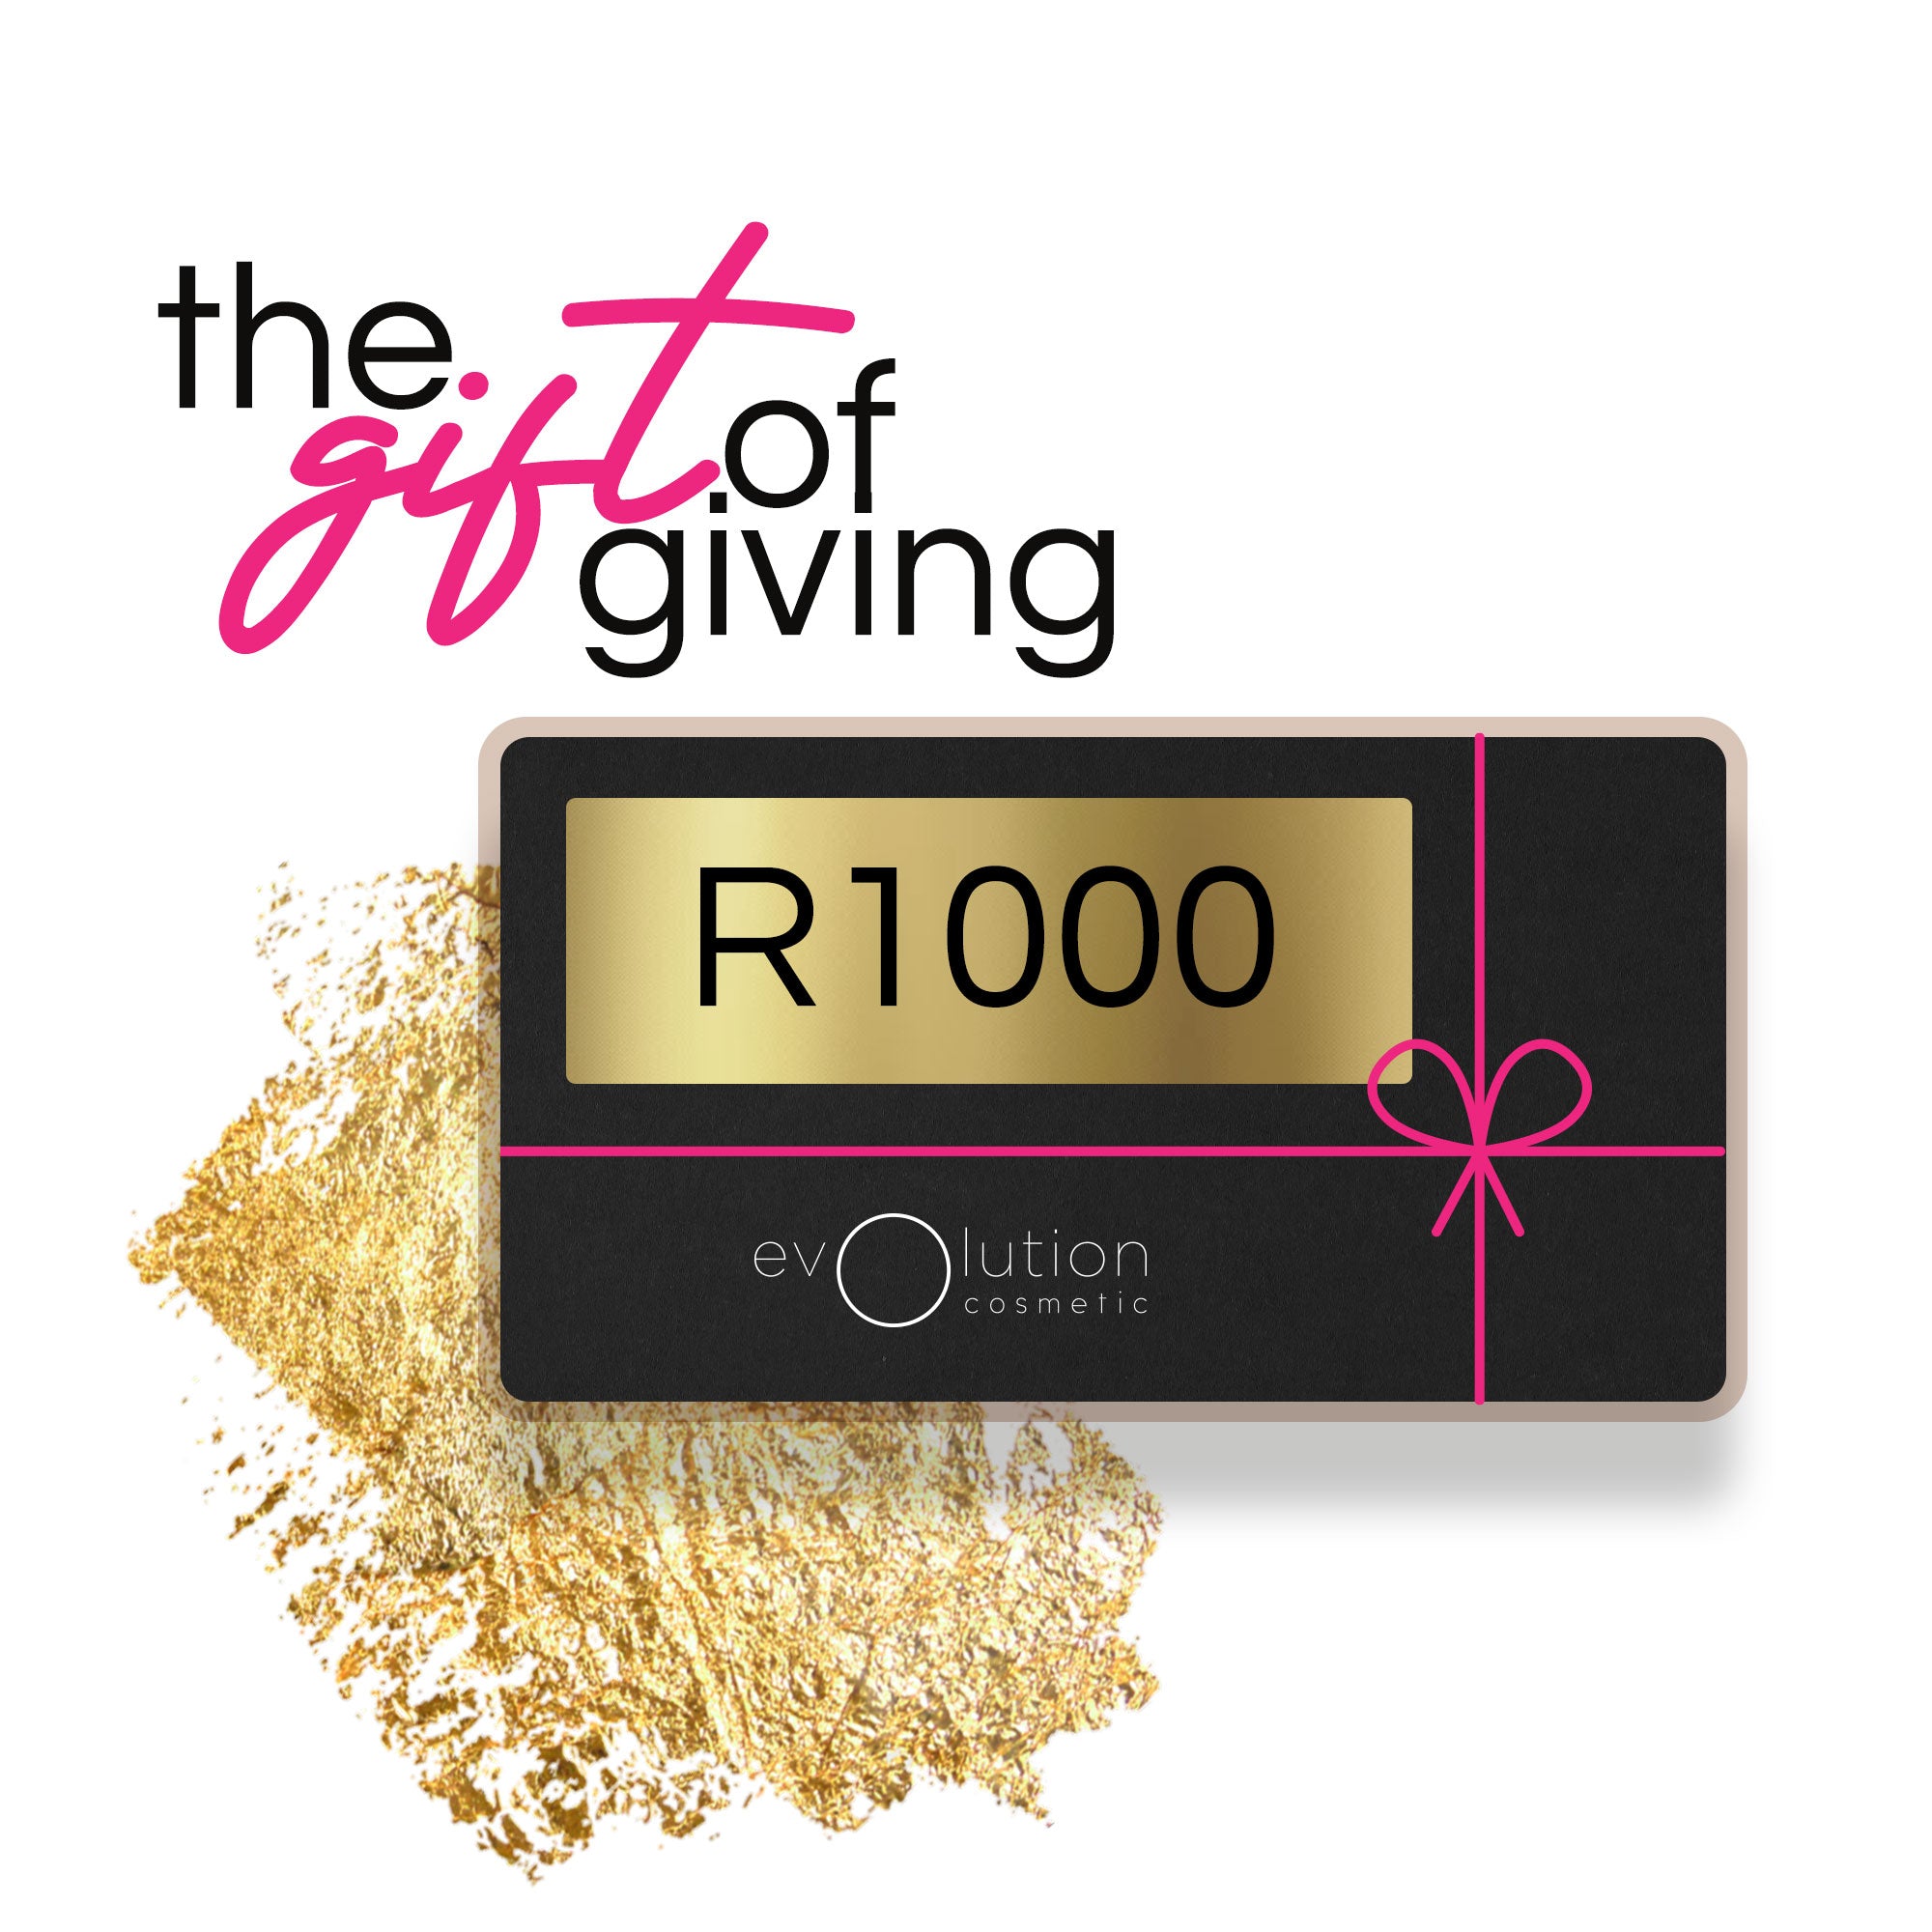 R1000 Gift Card